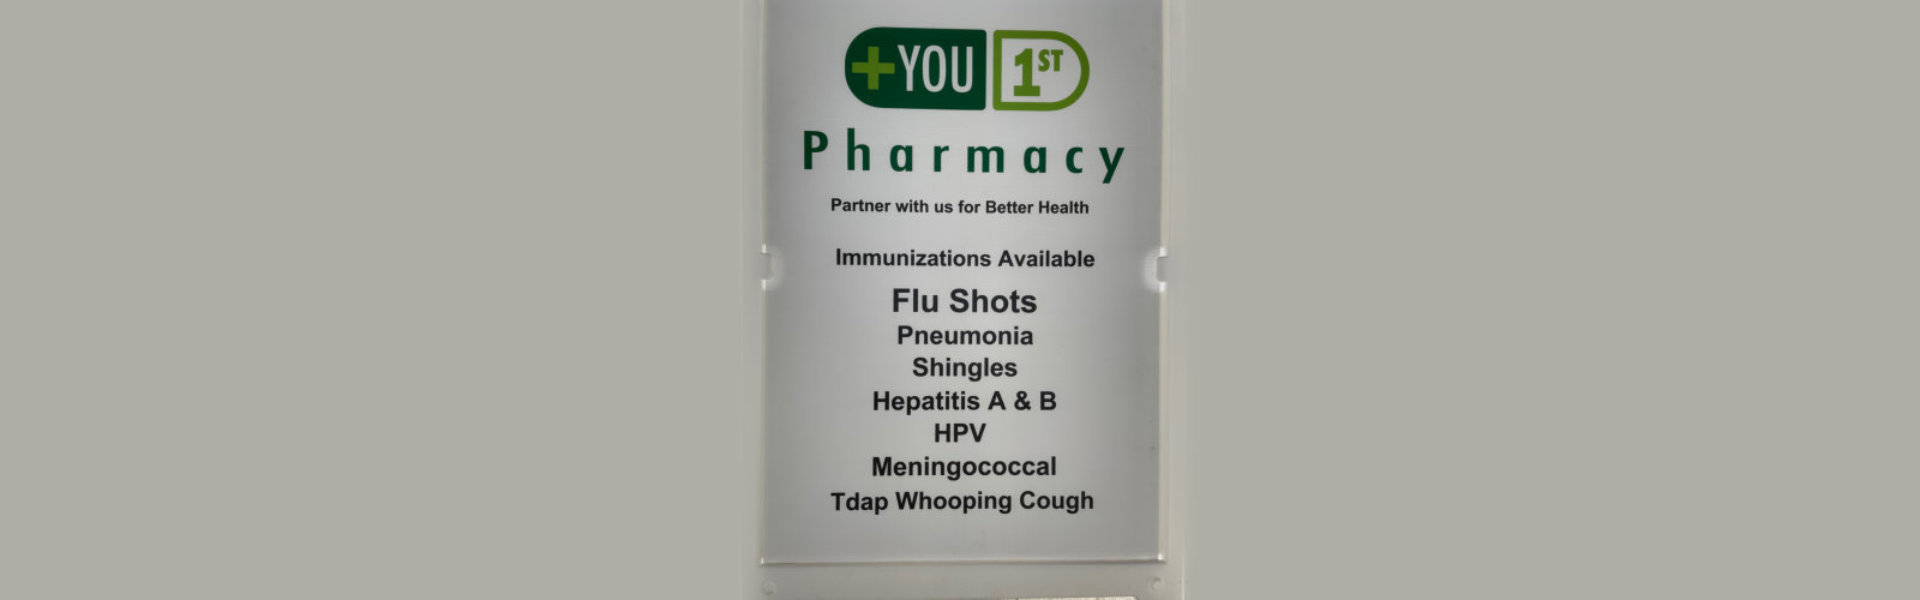 pharmacy info